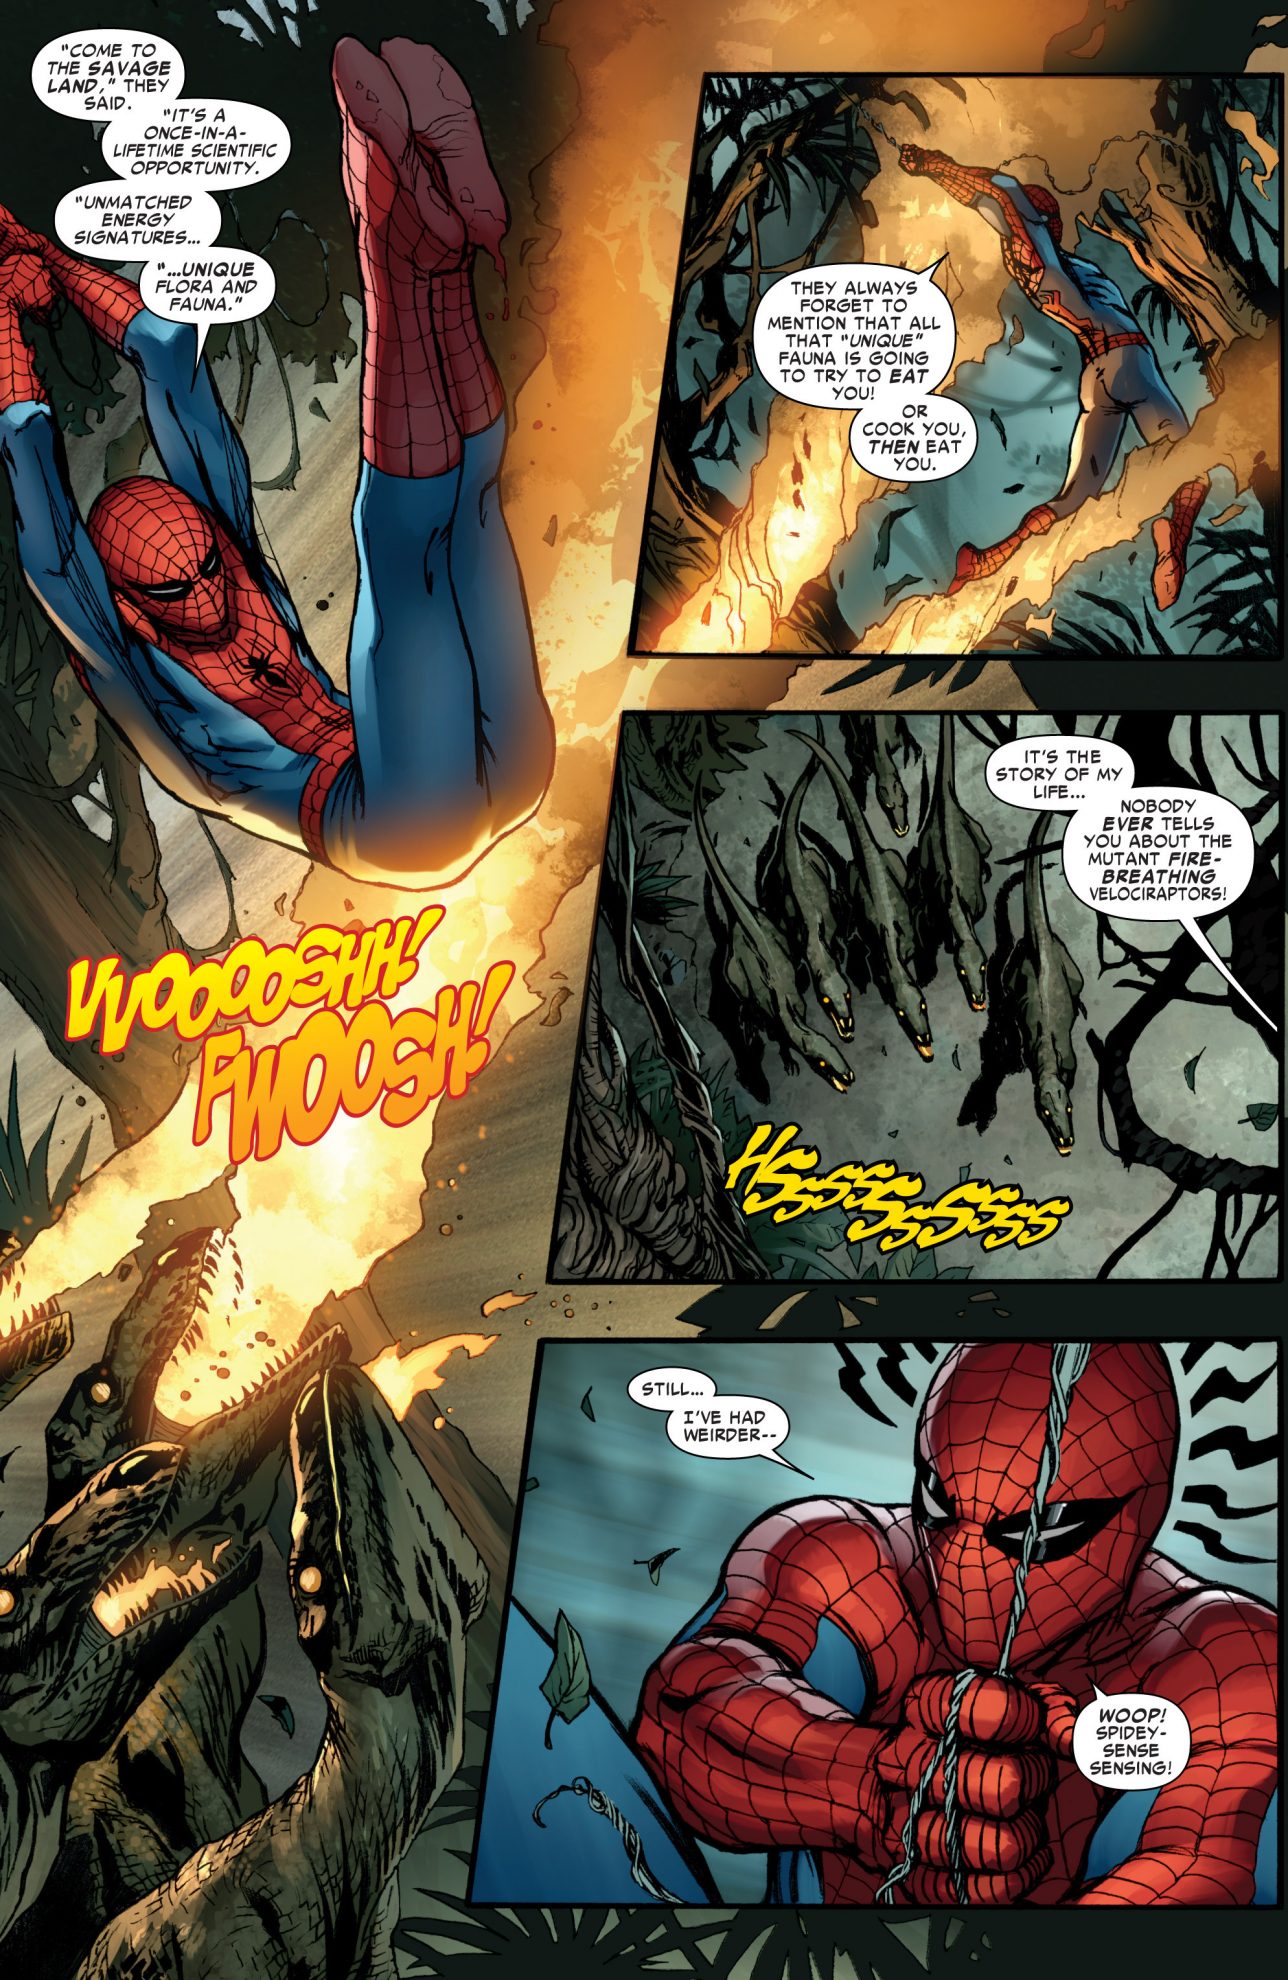 Spider-Man VS Savage Land Dinosaurs